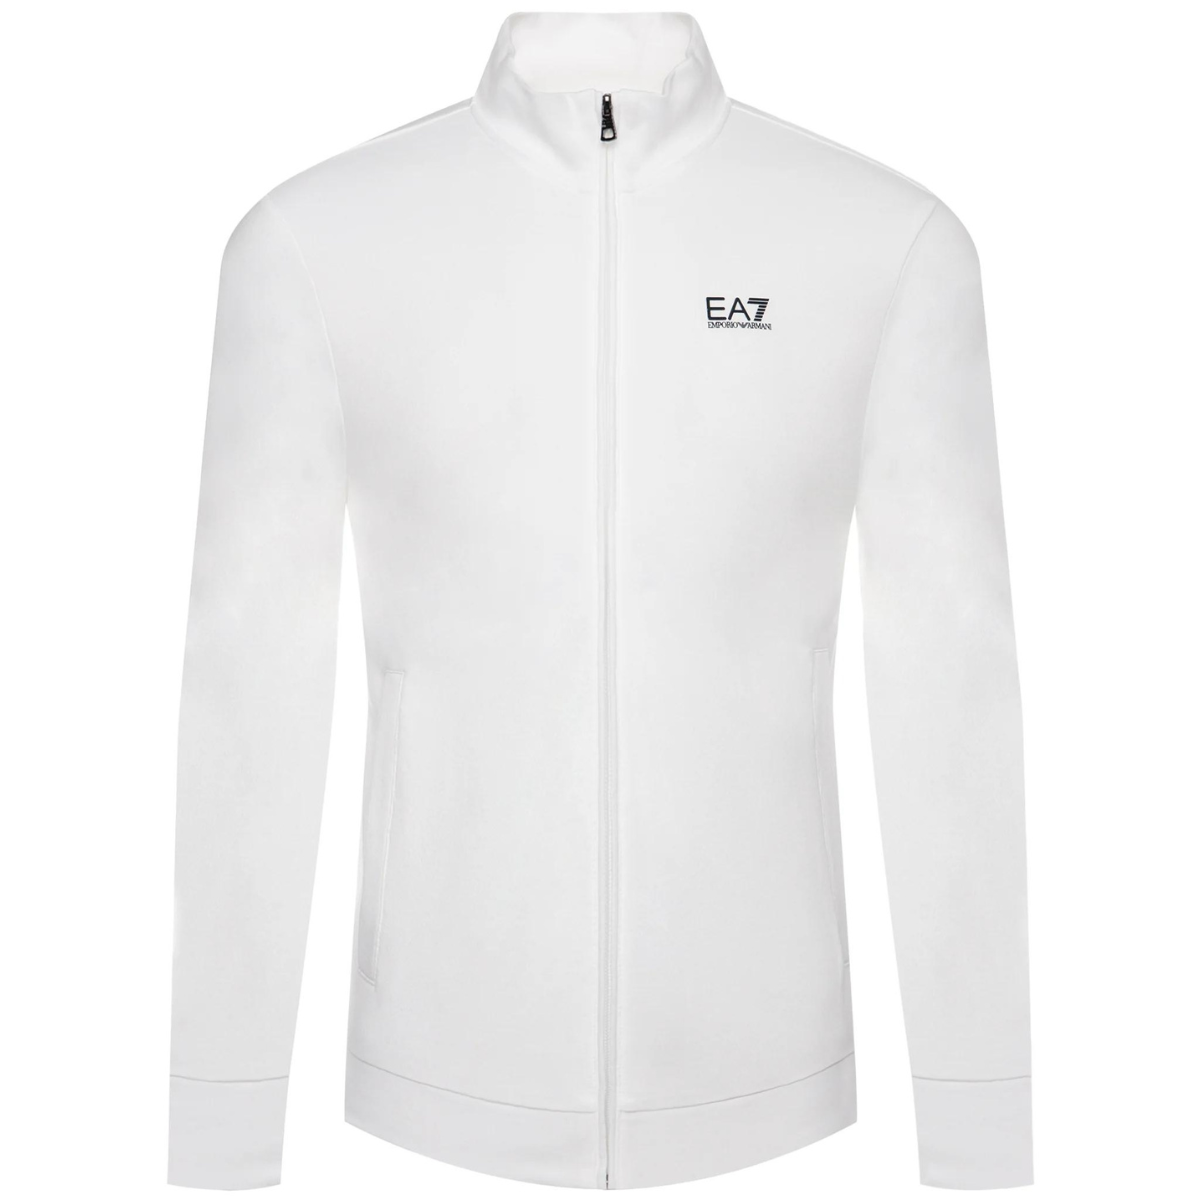 EA7 Giorgio Armani - Man Jersey Sweatshirt - White